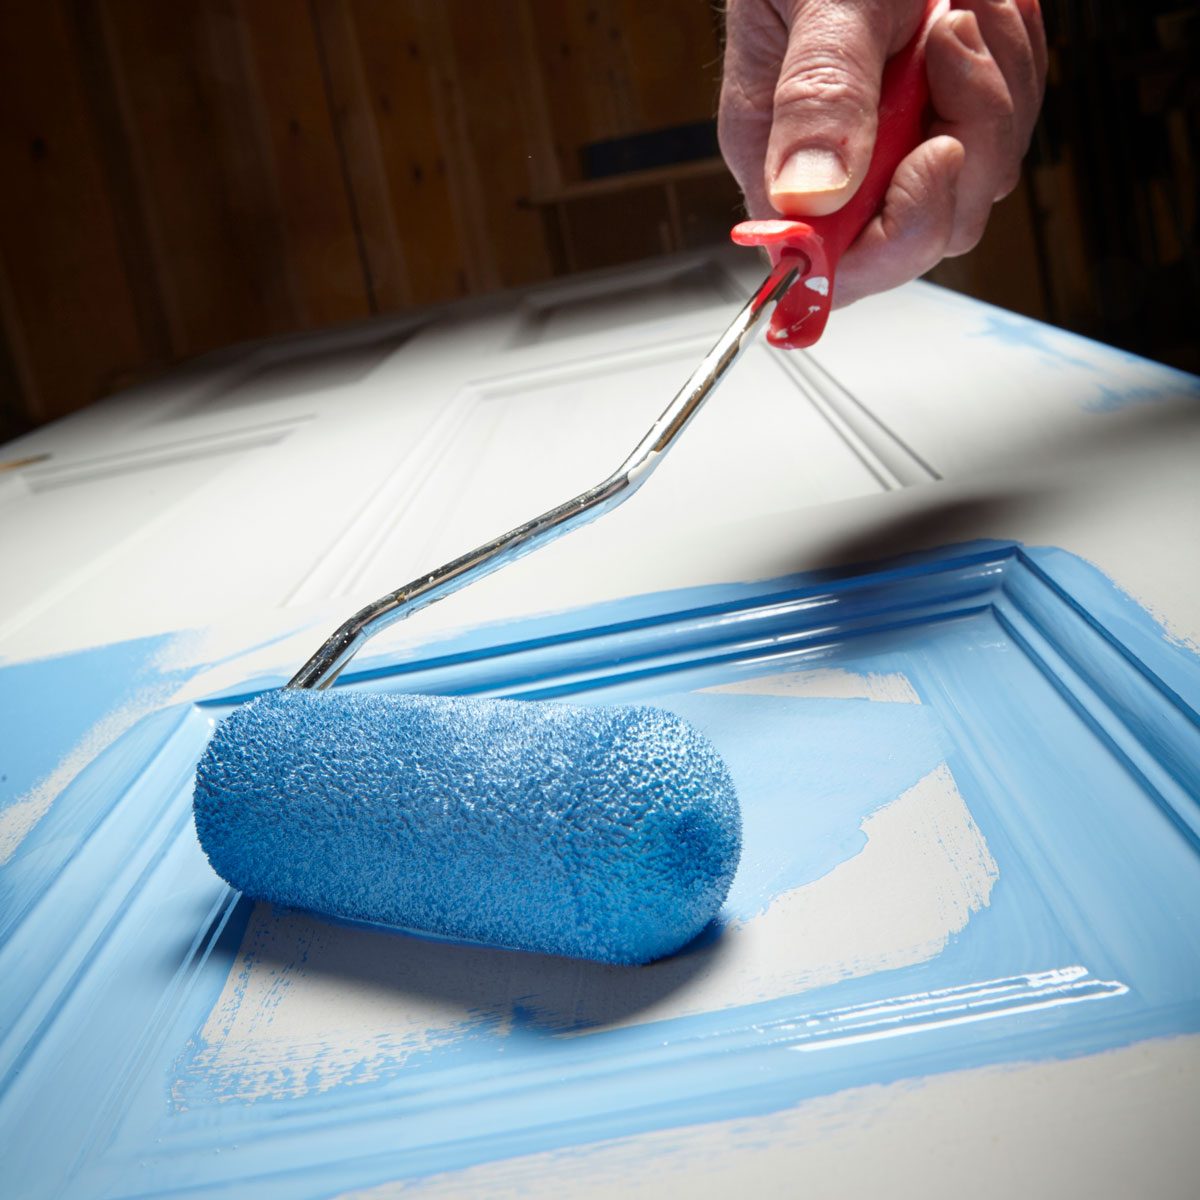 2 Inch Foam Paint Brushes Bevel Edge with Wood Handle Sponge